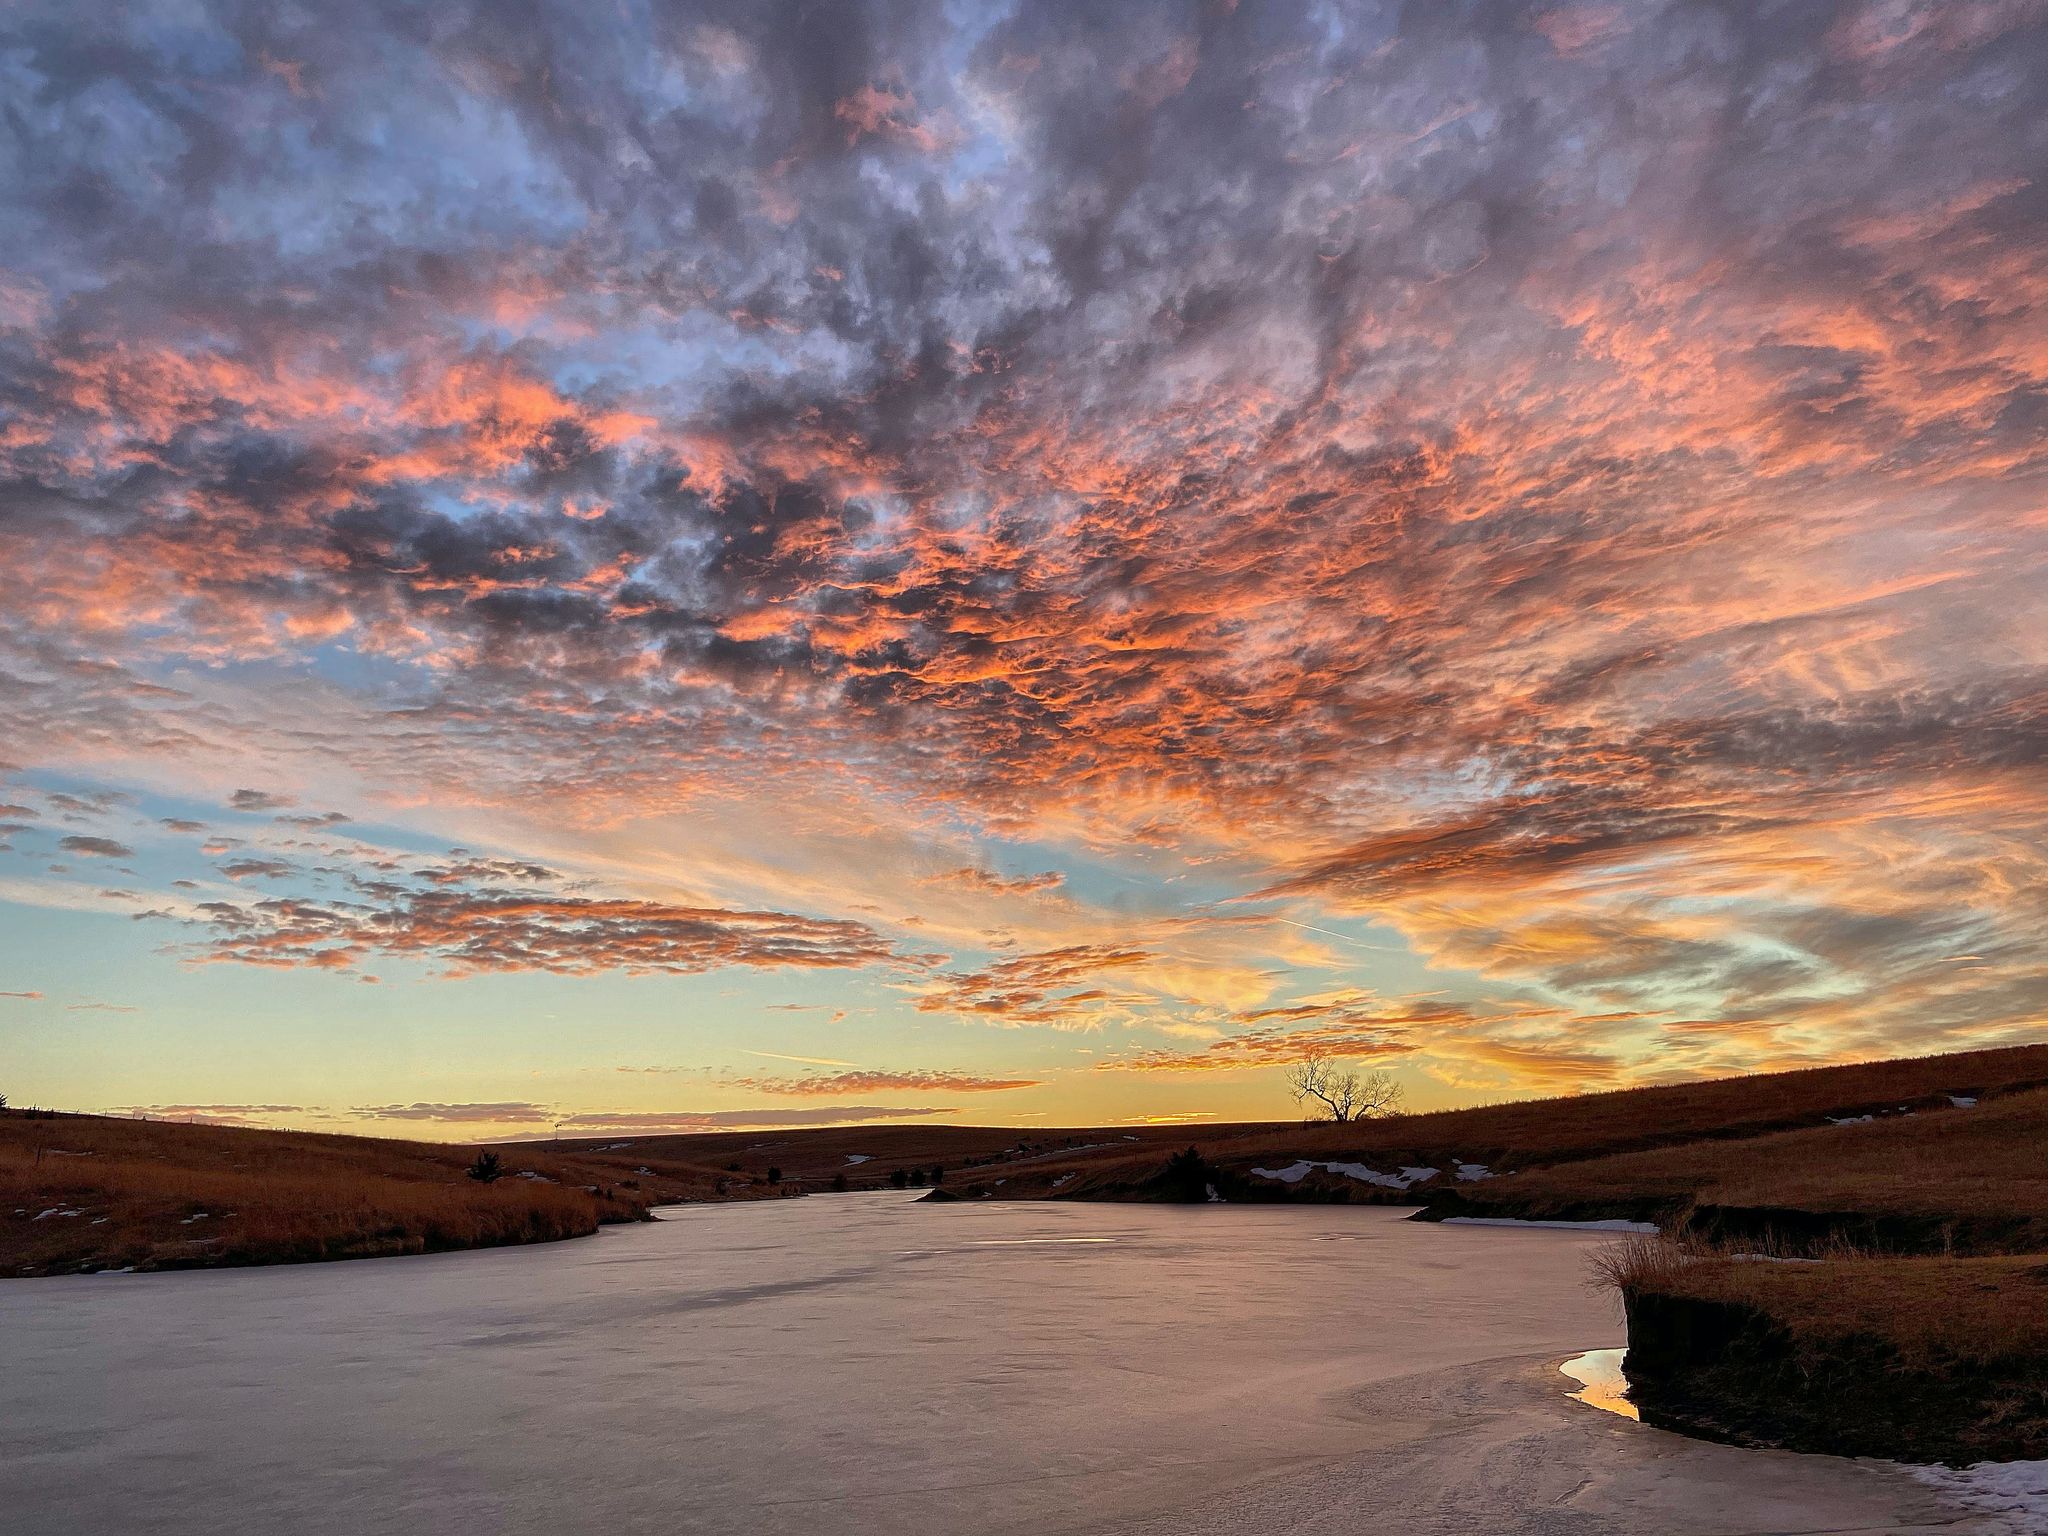 Nebraska, USA, sunset with clouds.